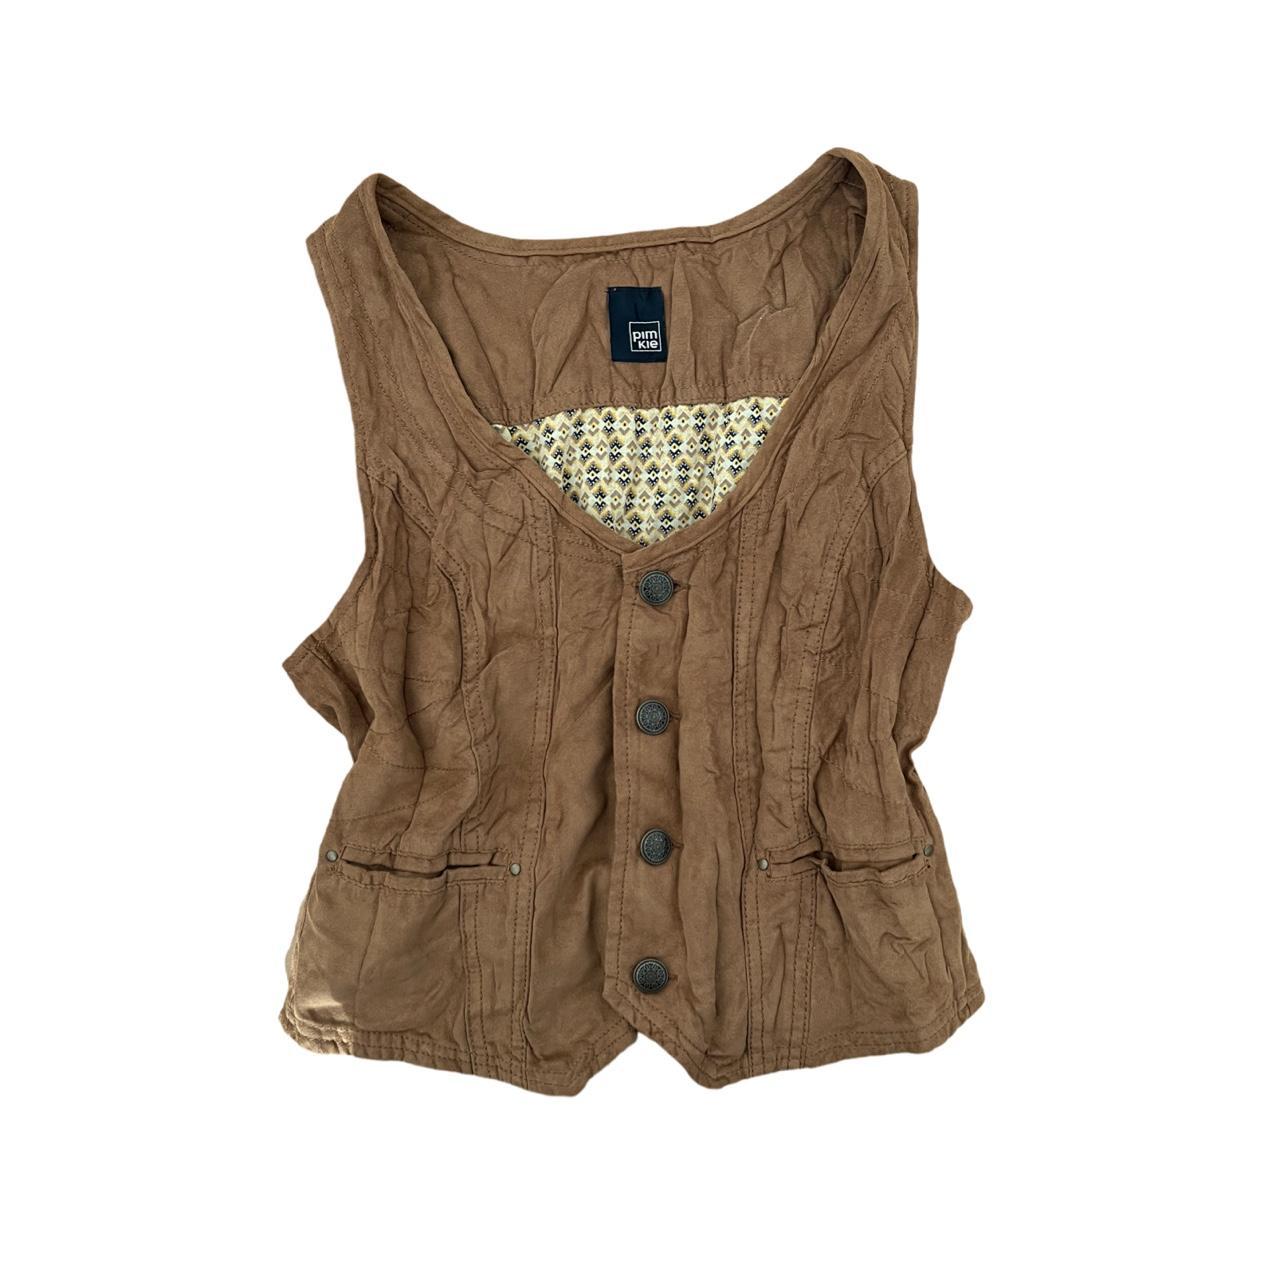 Pimkie Women's Brown and Tan Vest (3)